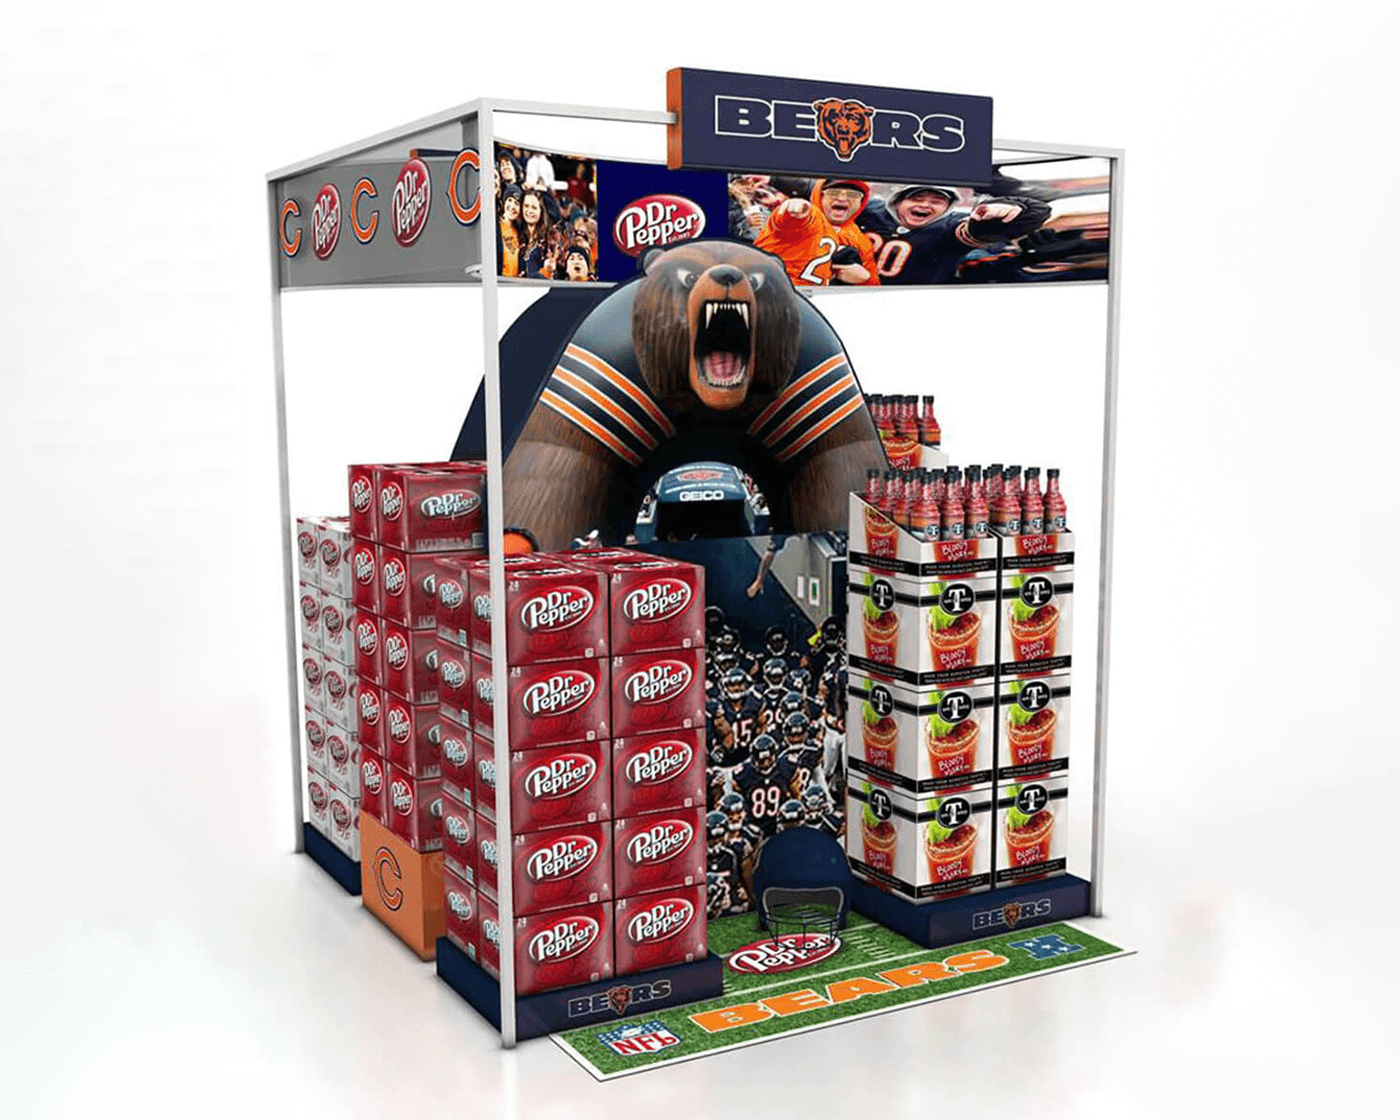 A visual merchandising display